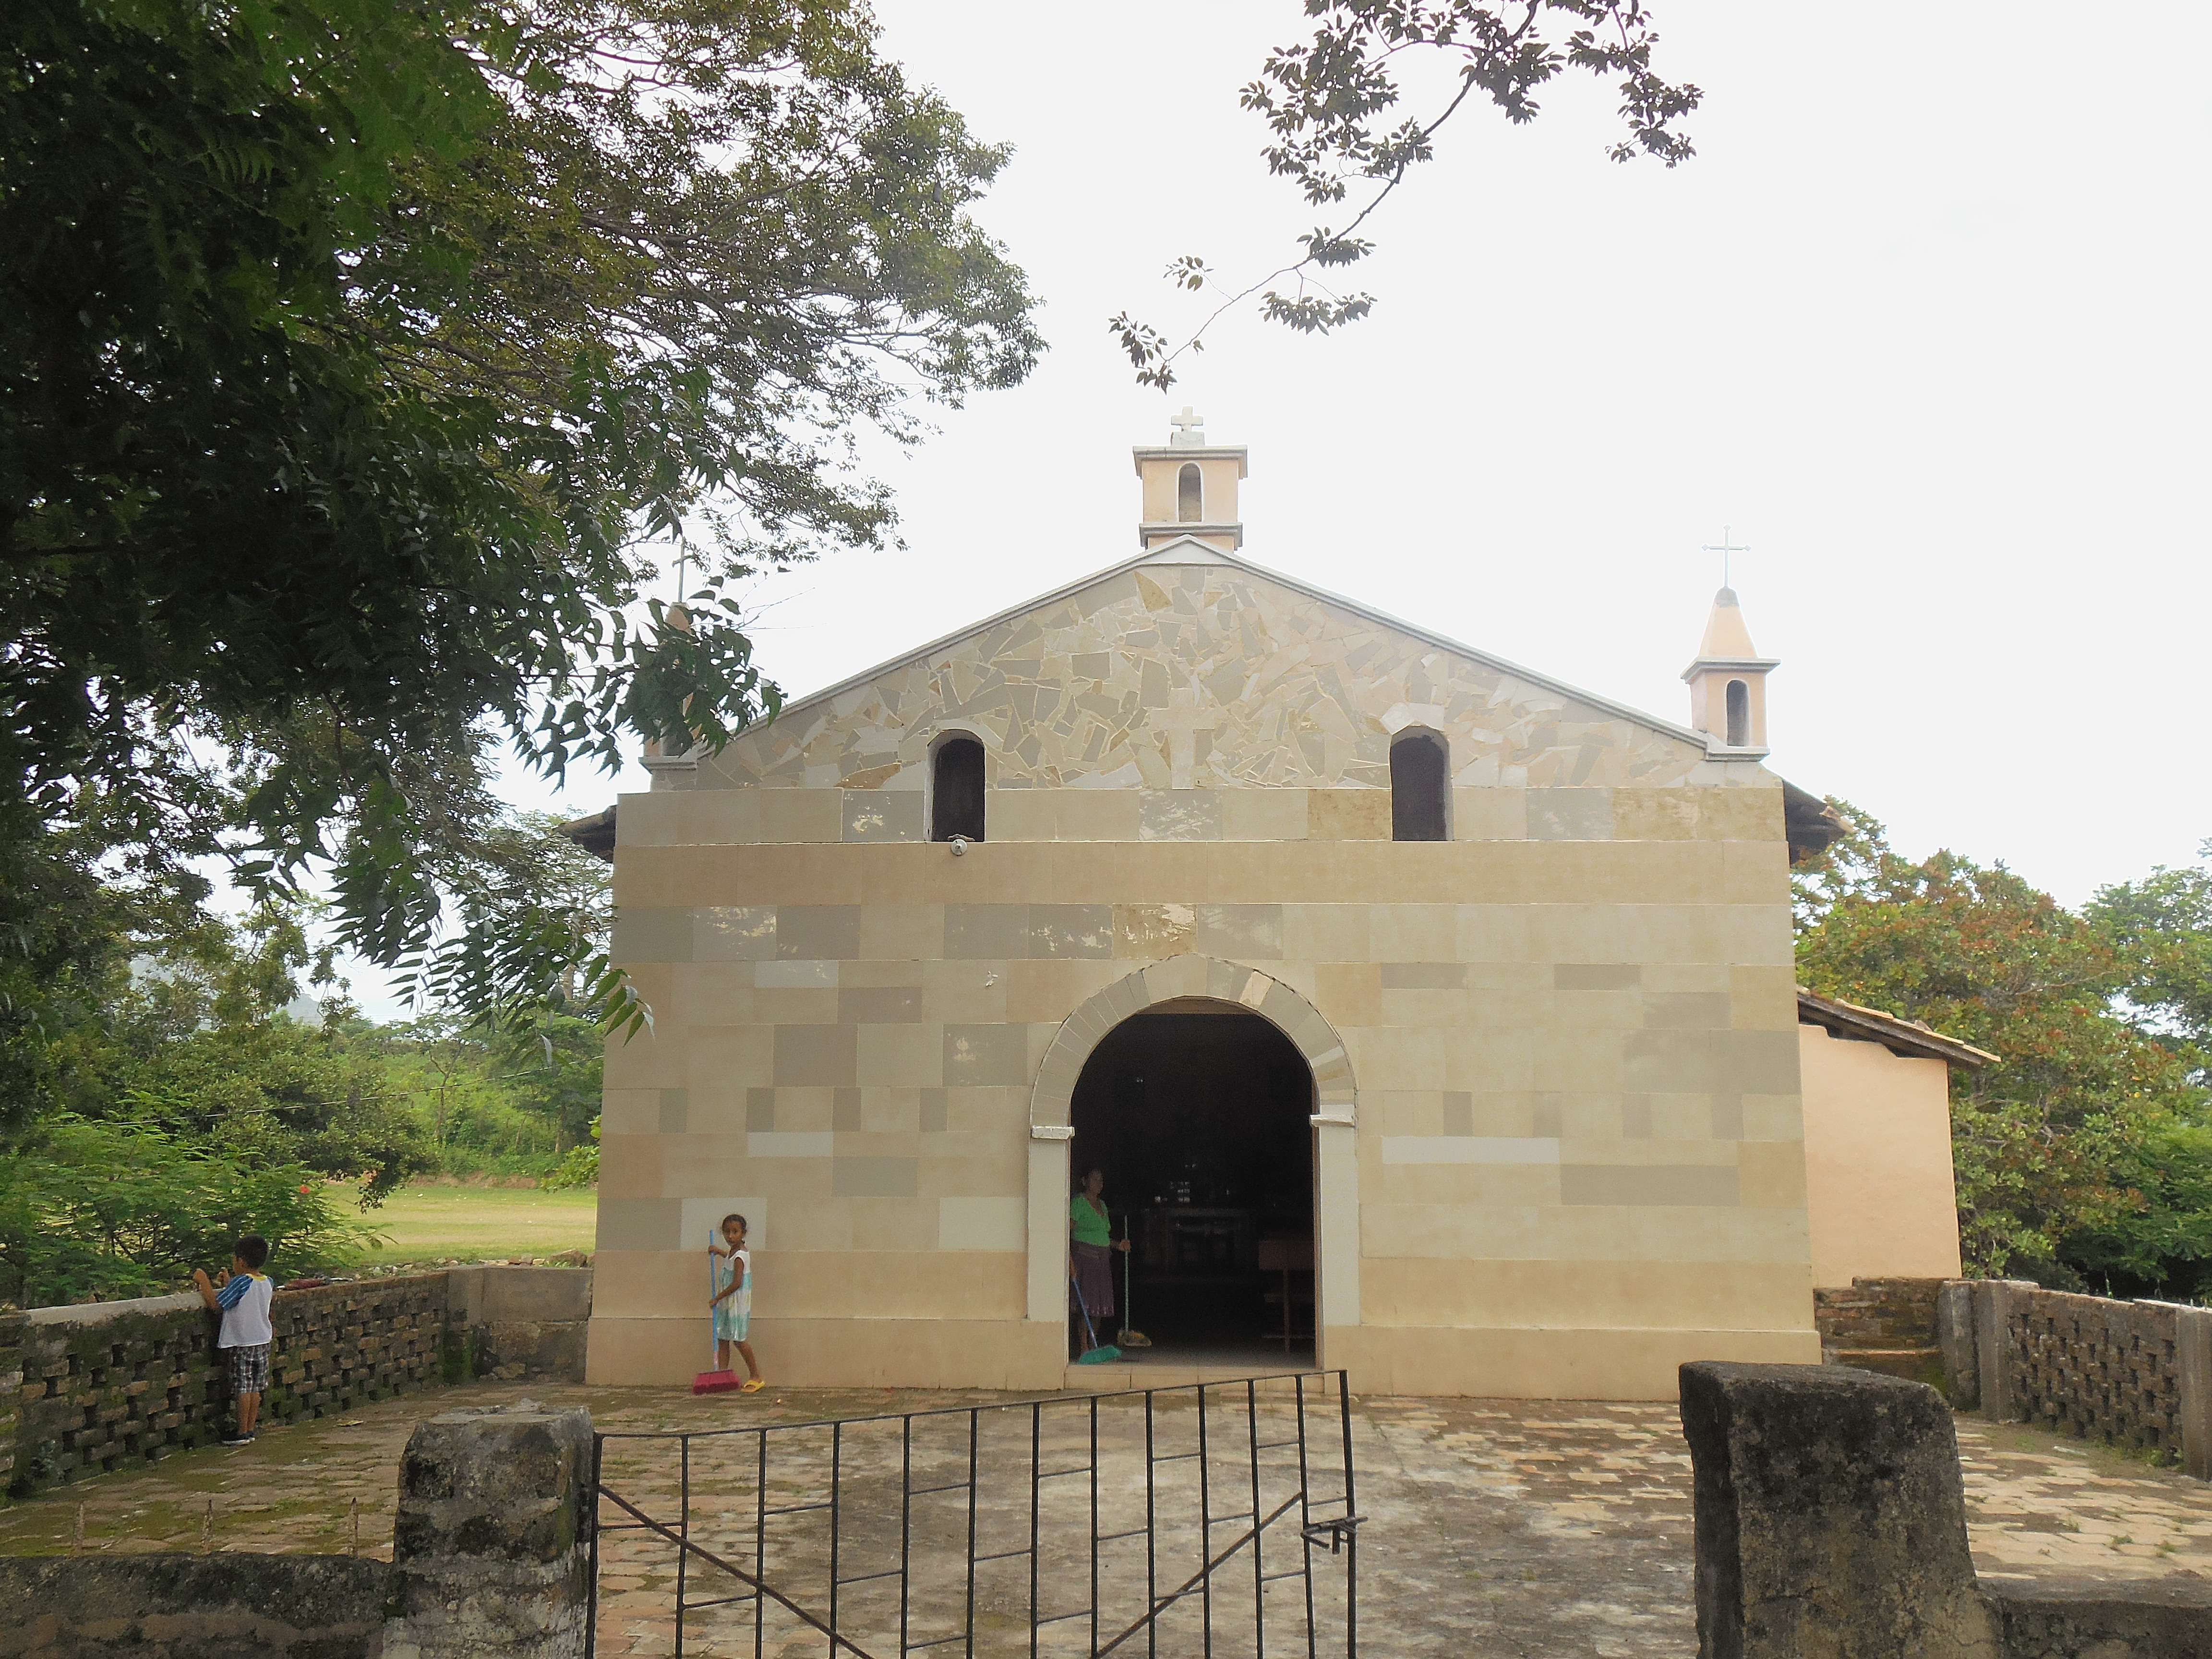 The Church of Santa Cruz